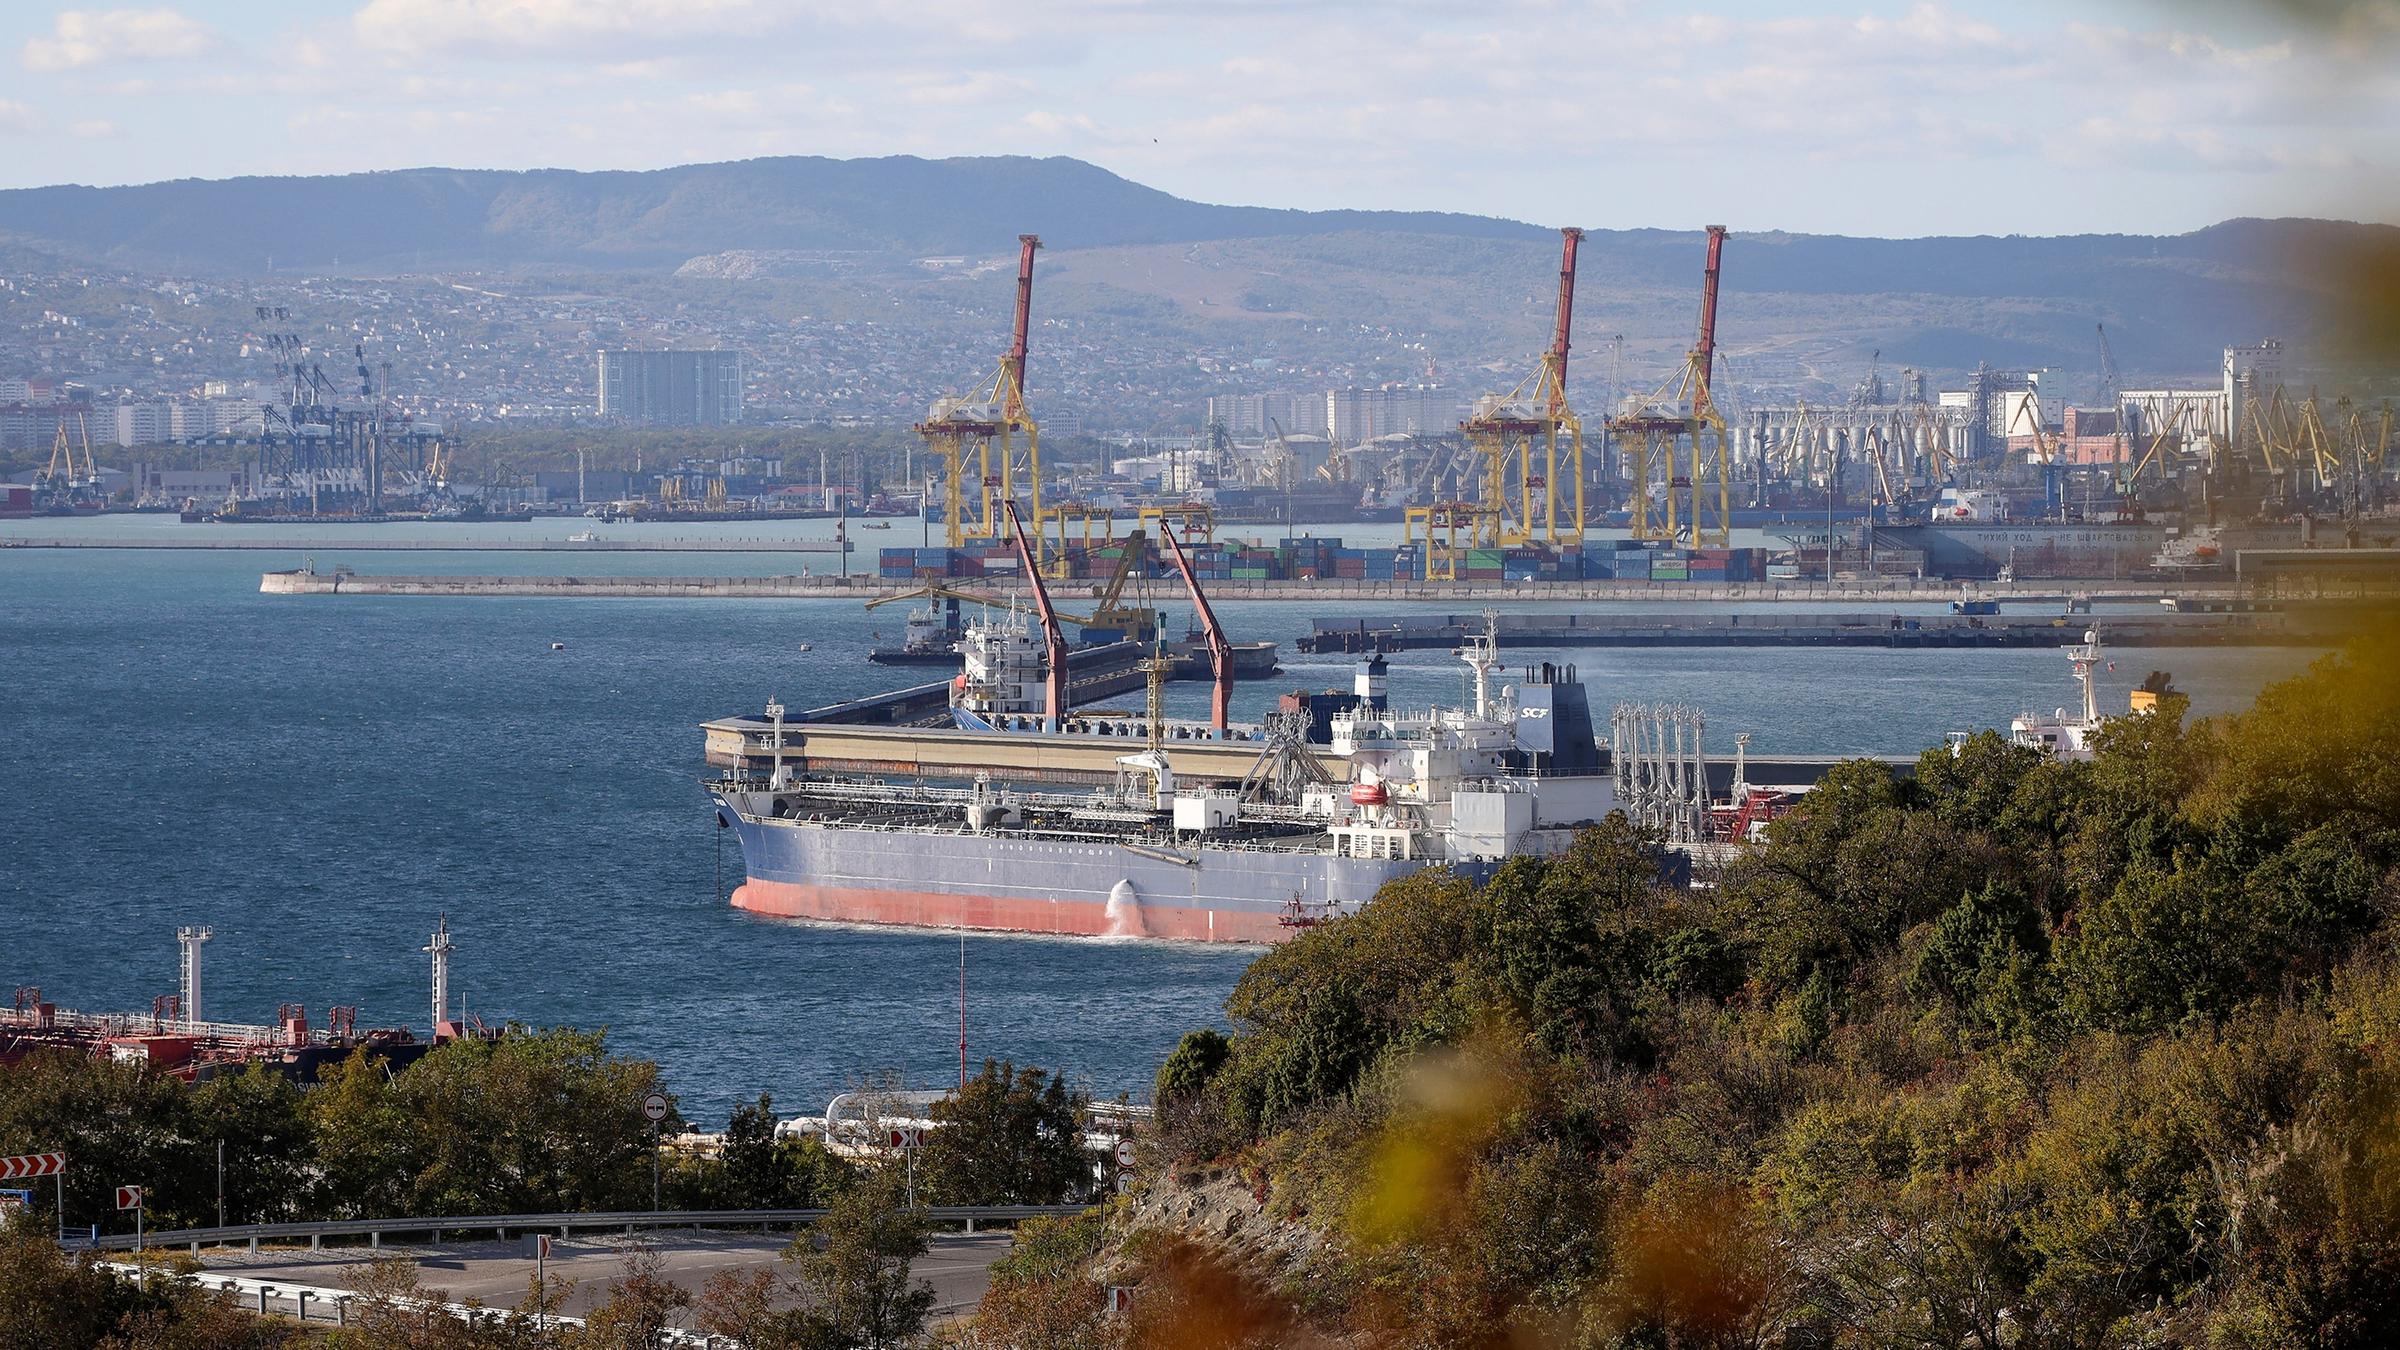 Russian tanker in the port of Novorossiysk, Russia